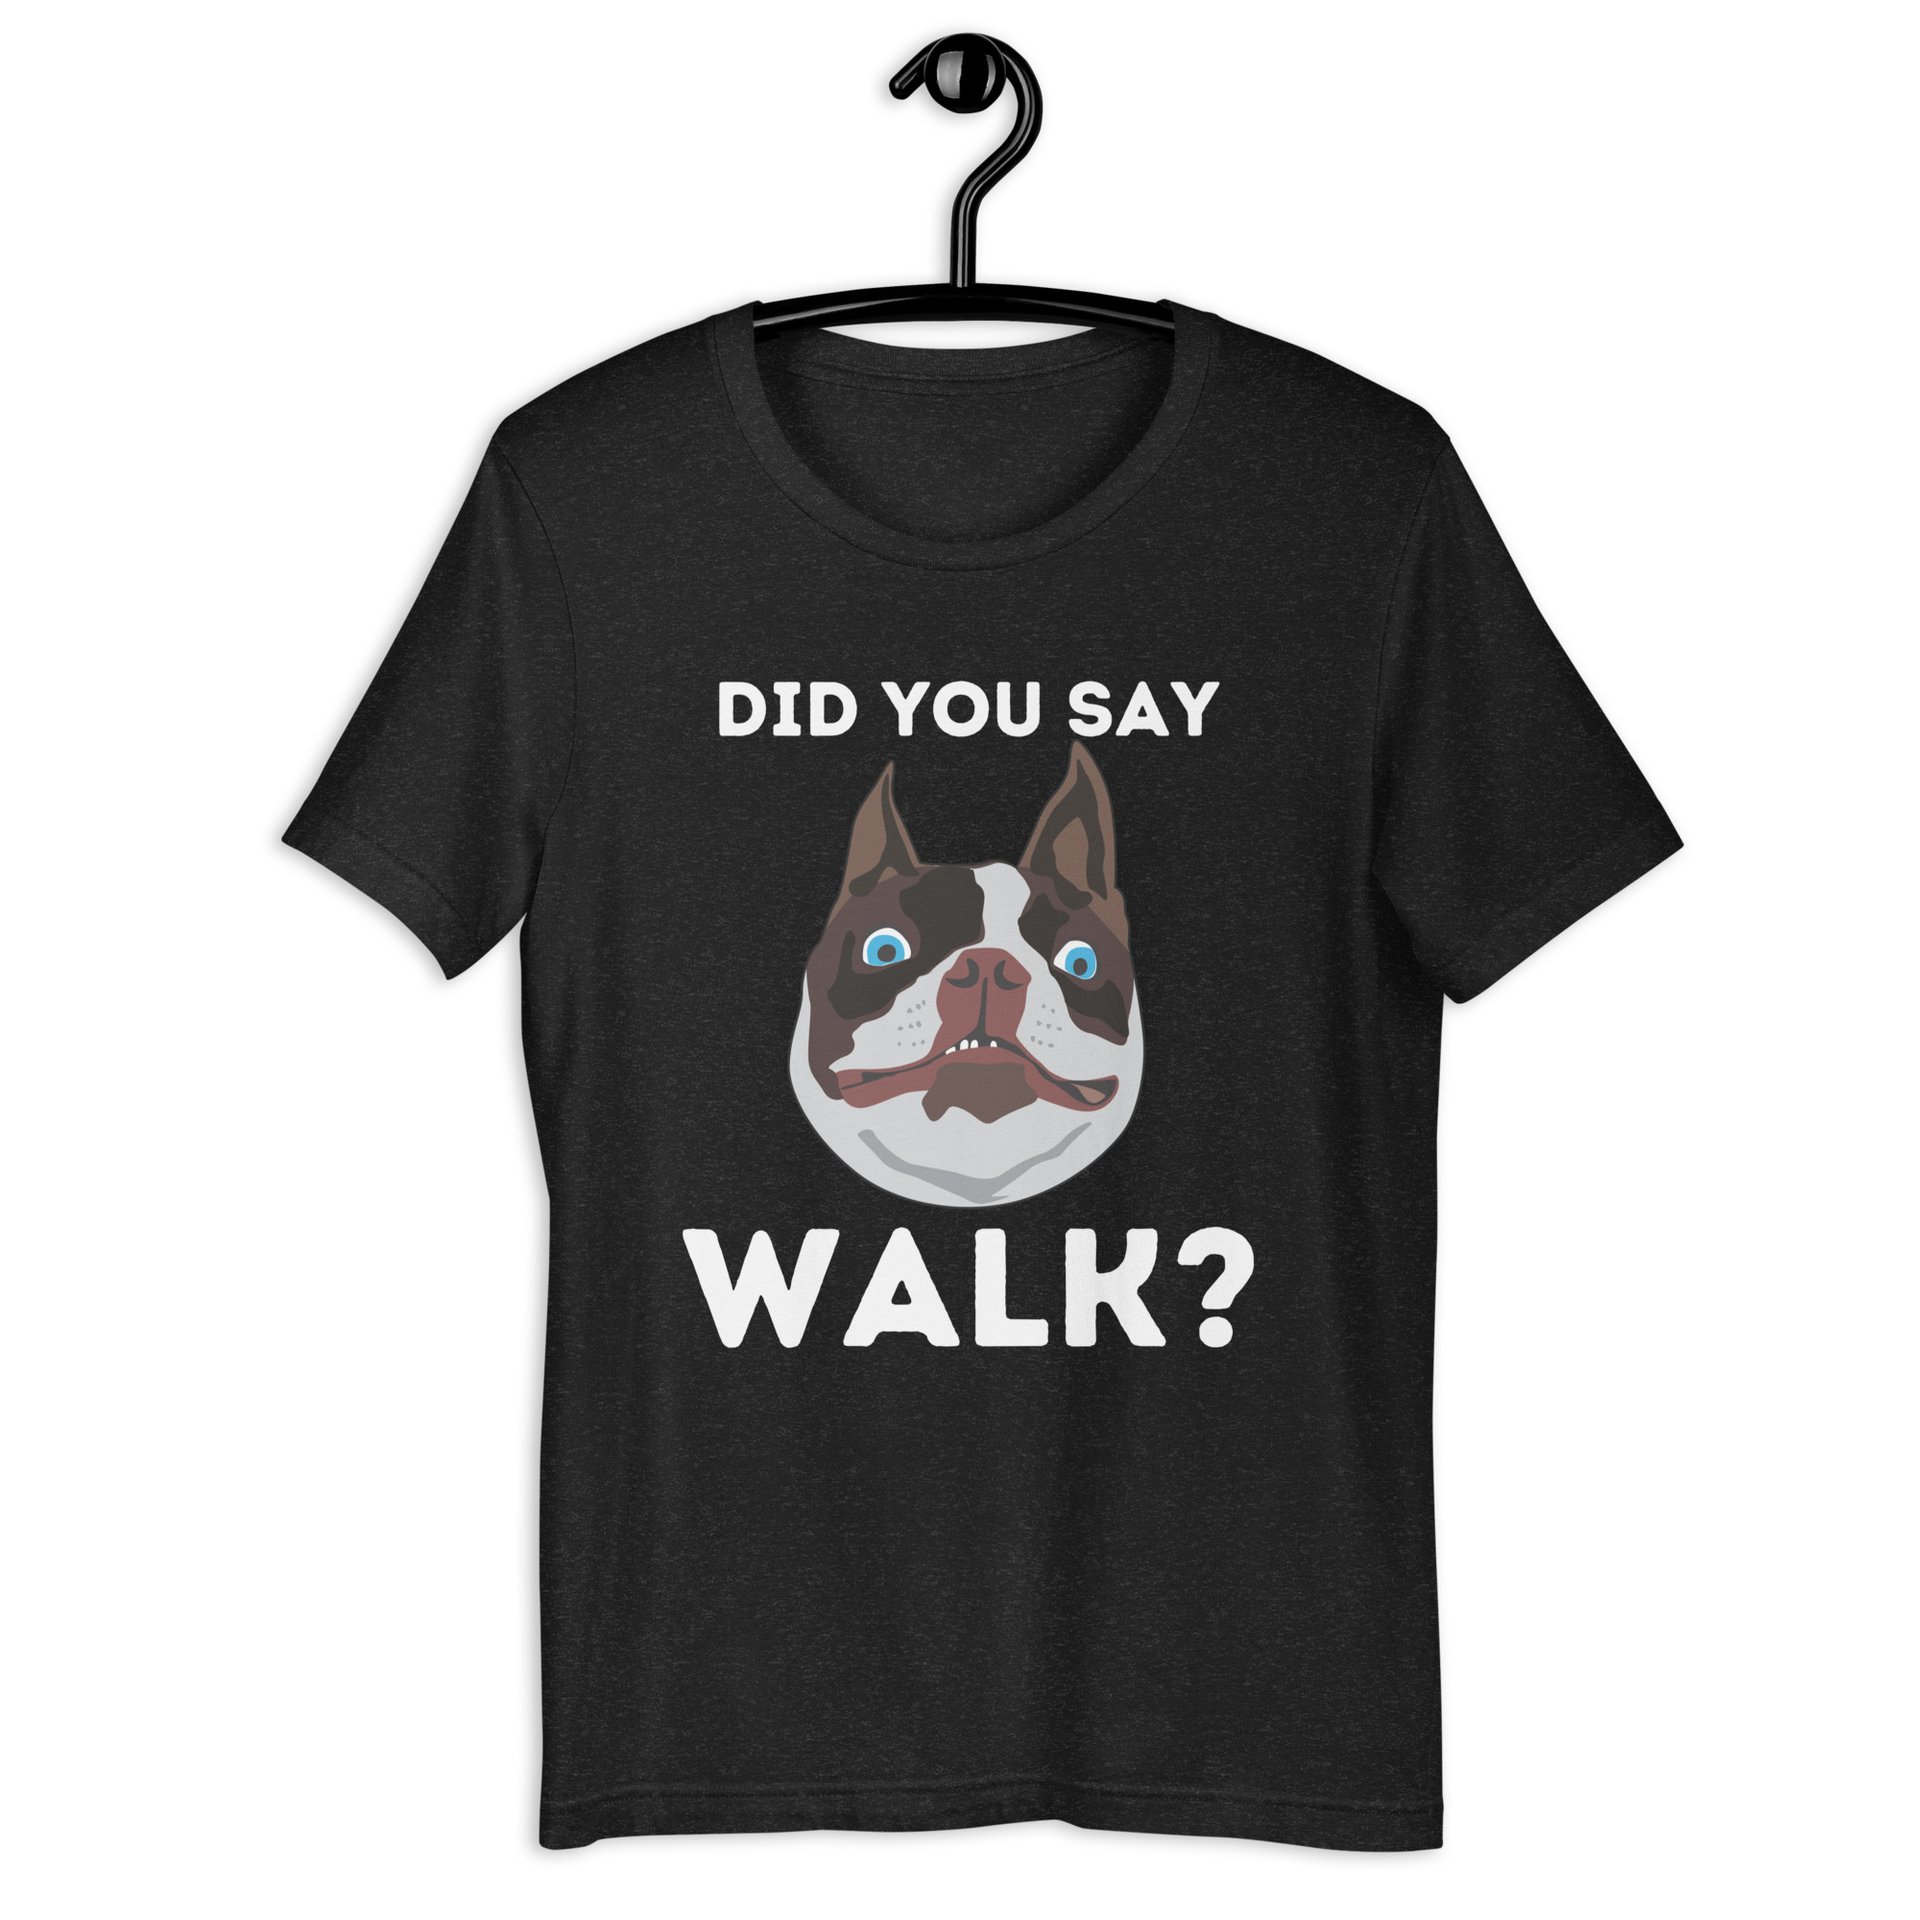 "Did You Say Walk?" Funny Dog Unisex T-Shirt. Black Heather